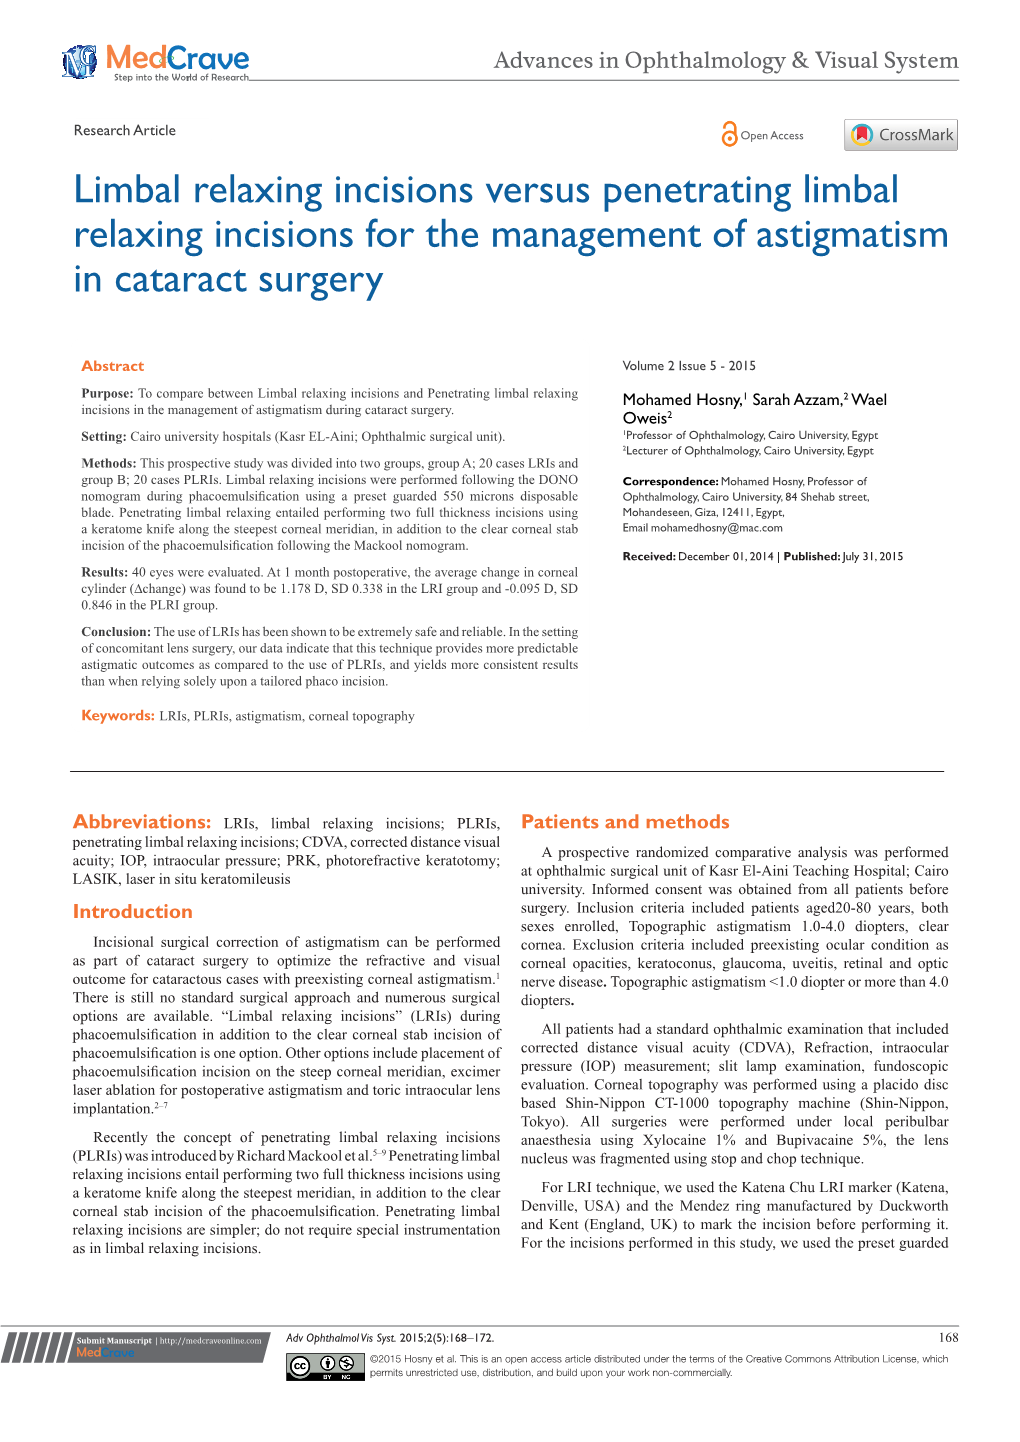 Limbal Relaxing Incisions Versus Penetrating Limbal Relaxing Incisions for the Management of Astigmatism in Cataract Surgery